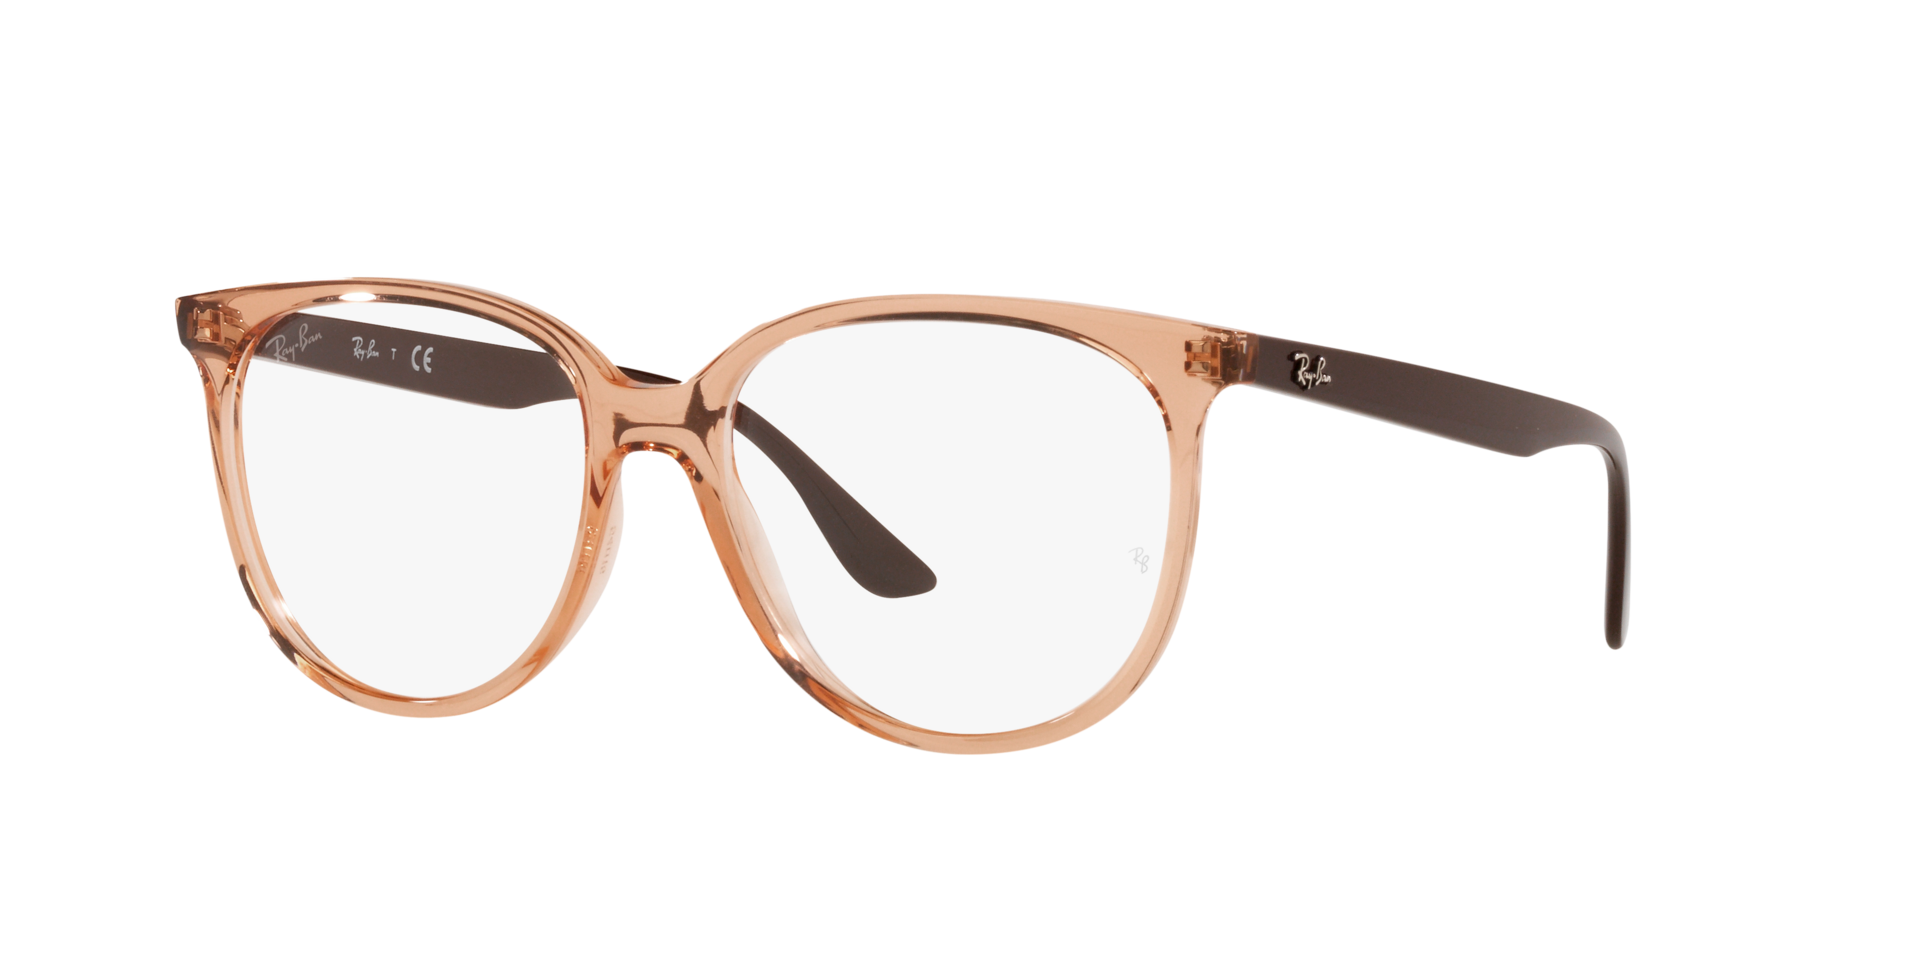 Buy Best Ray-Ban Modern Twist Sunglasses Online.